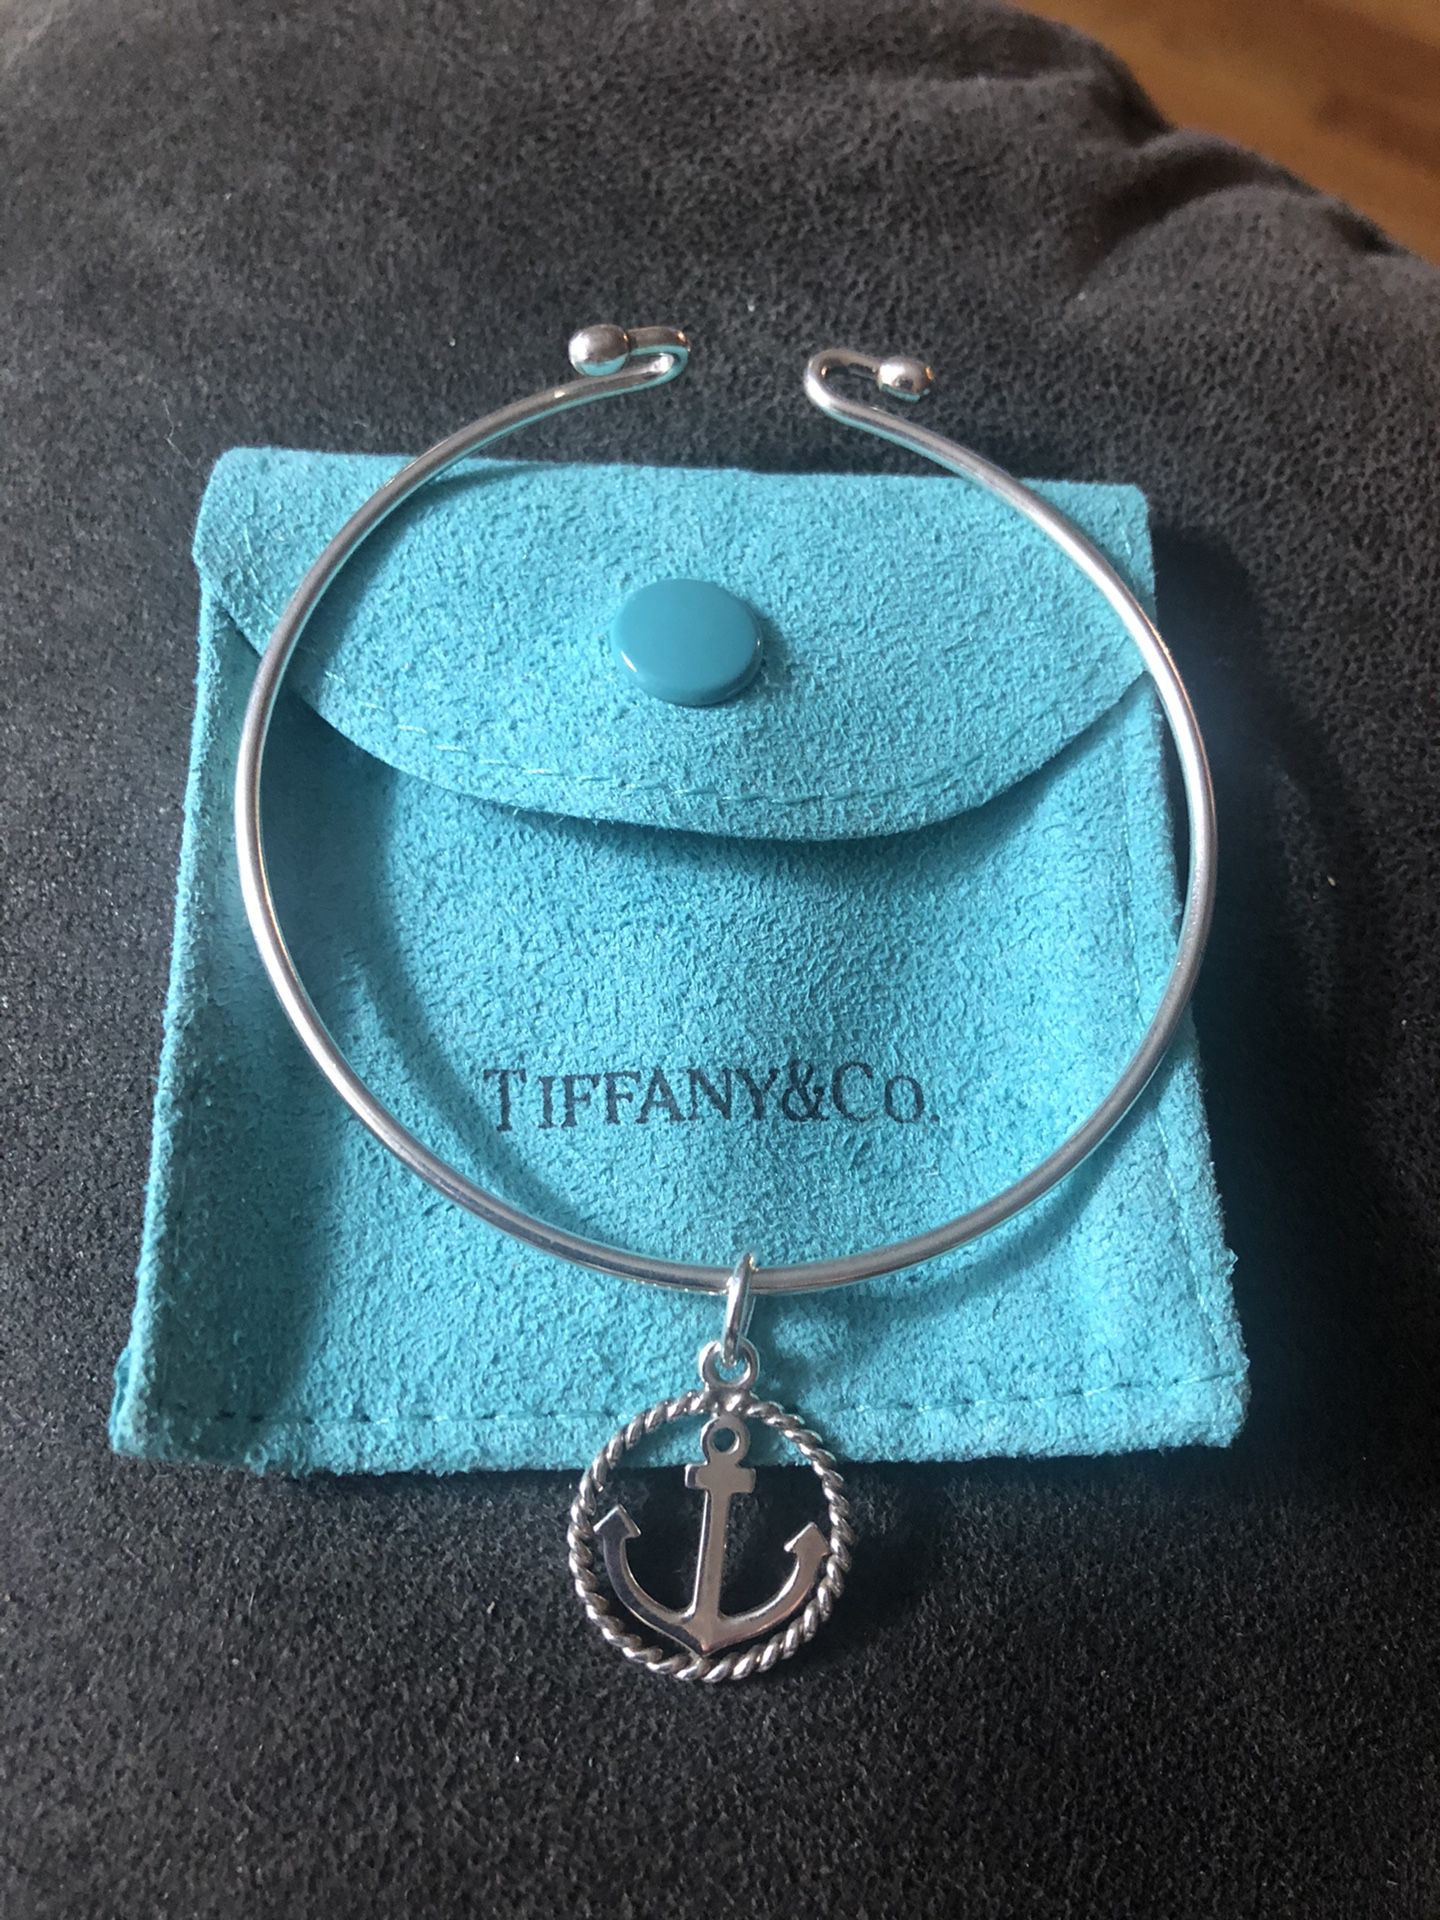 Tiffany & Co bracelet and anchor charm